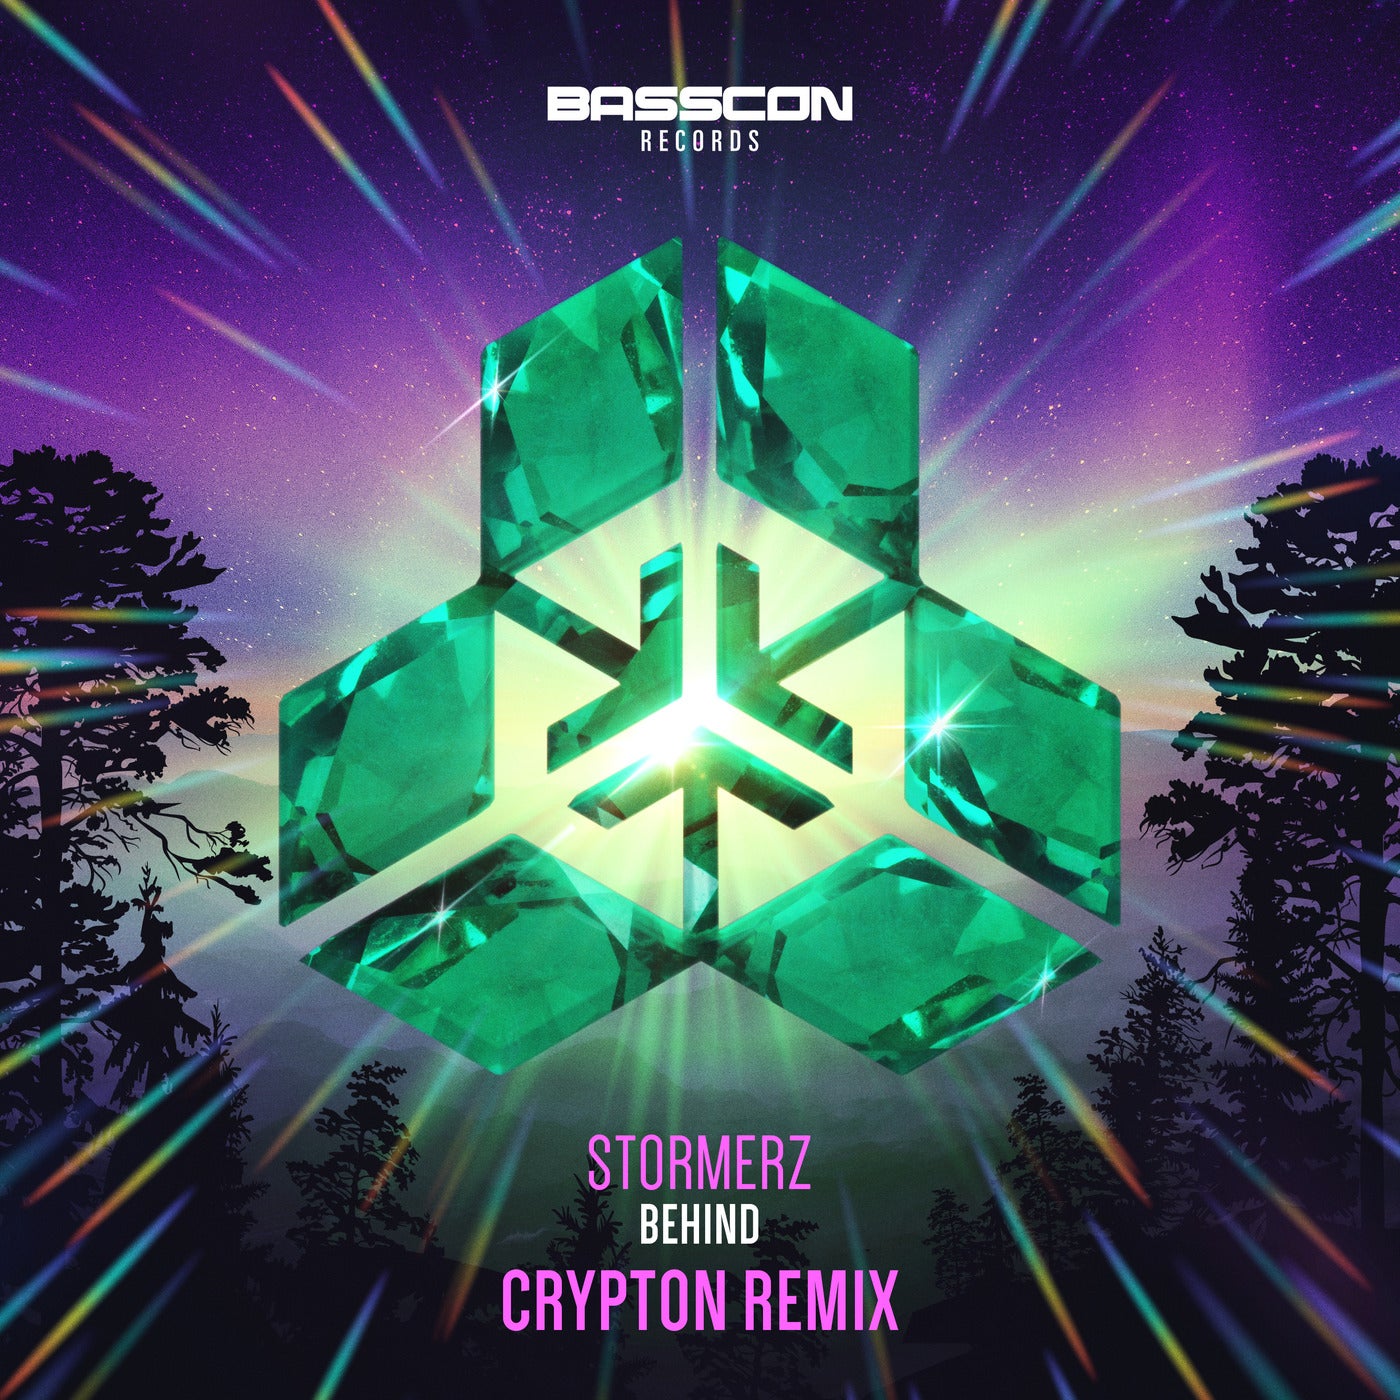 Behind - Crypton Remix